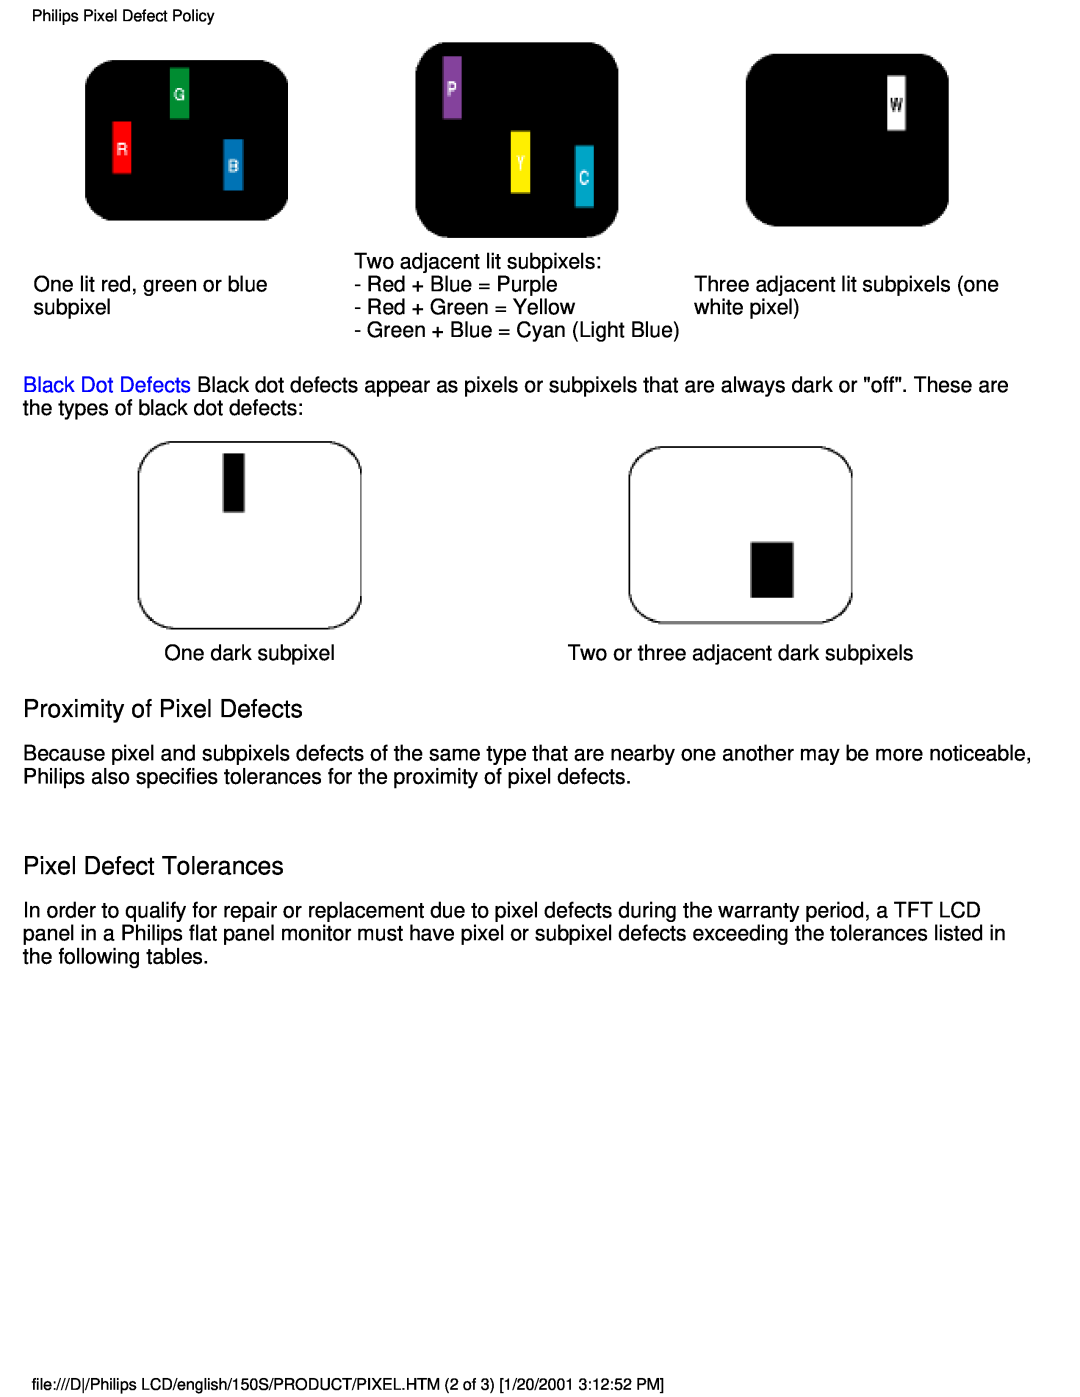 Philips 150S user manual Proximity of Pixel Defects, Pixel Defect Tolerances 